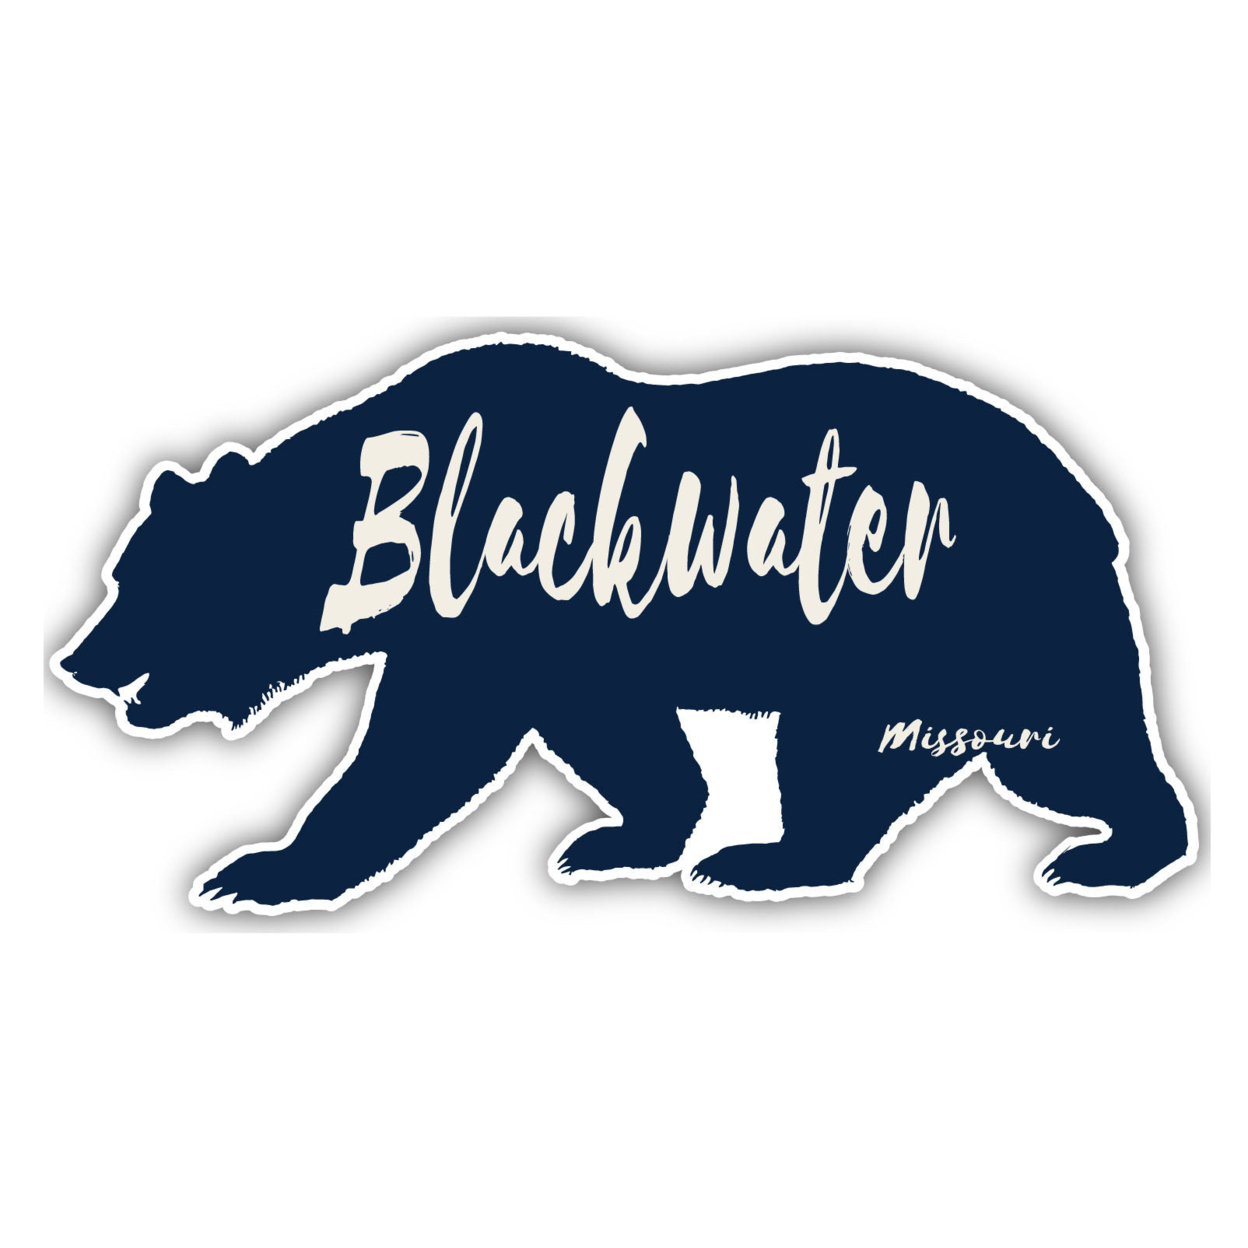 Blackwater Missouri Souvenir Decorative Stickers (Choose Theme And Size) - Single Unit, 10-Inch, Bear